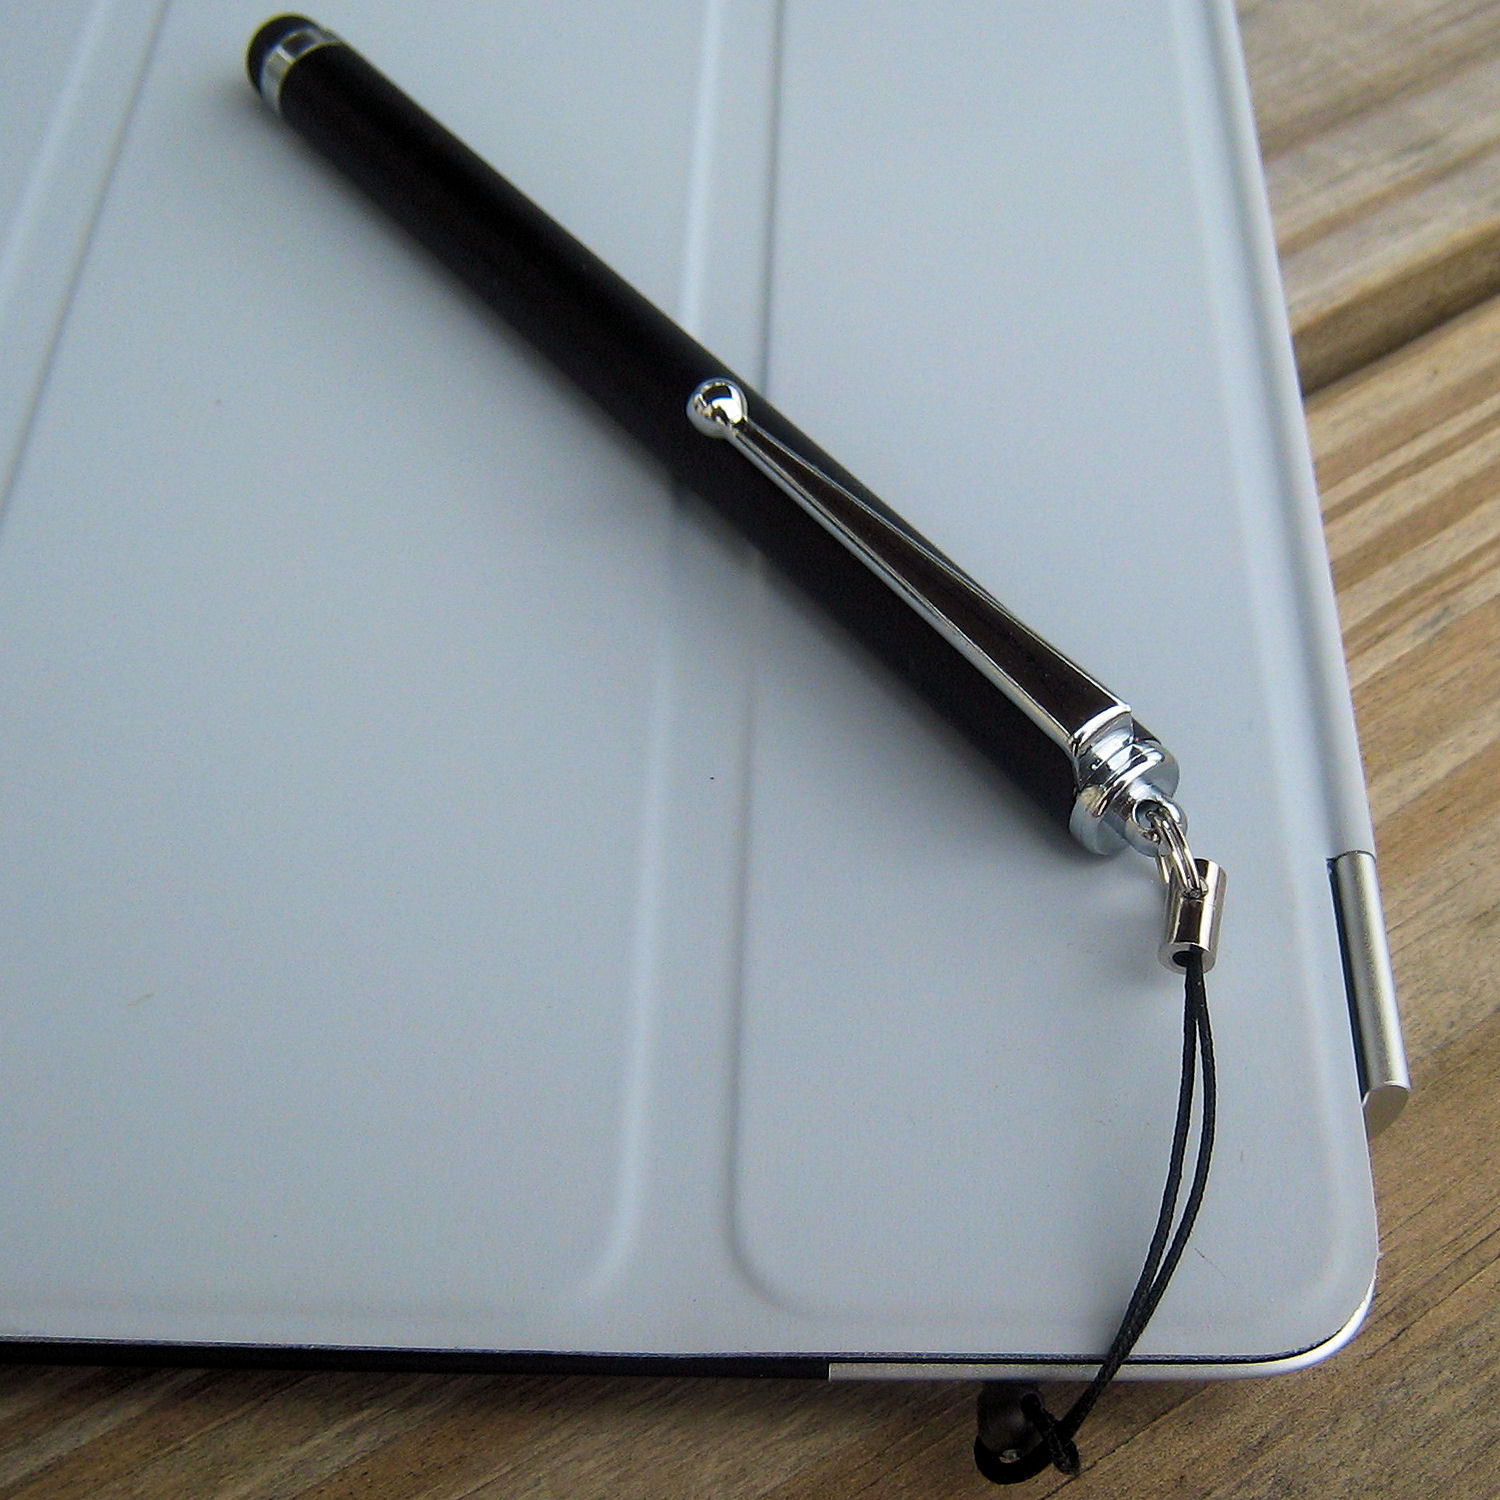 Gomadic Precision Tip Capacitive Stylus Pen designed for the Motorola DROID RAZR M (Black Color) - Lifetime Warranty